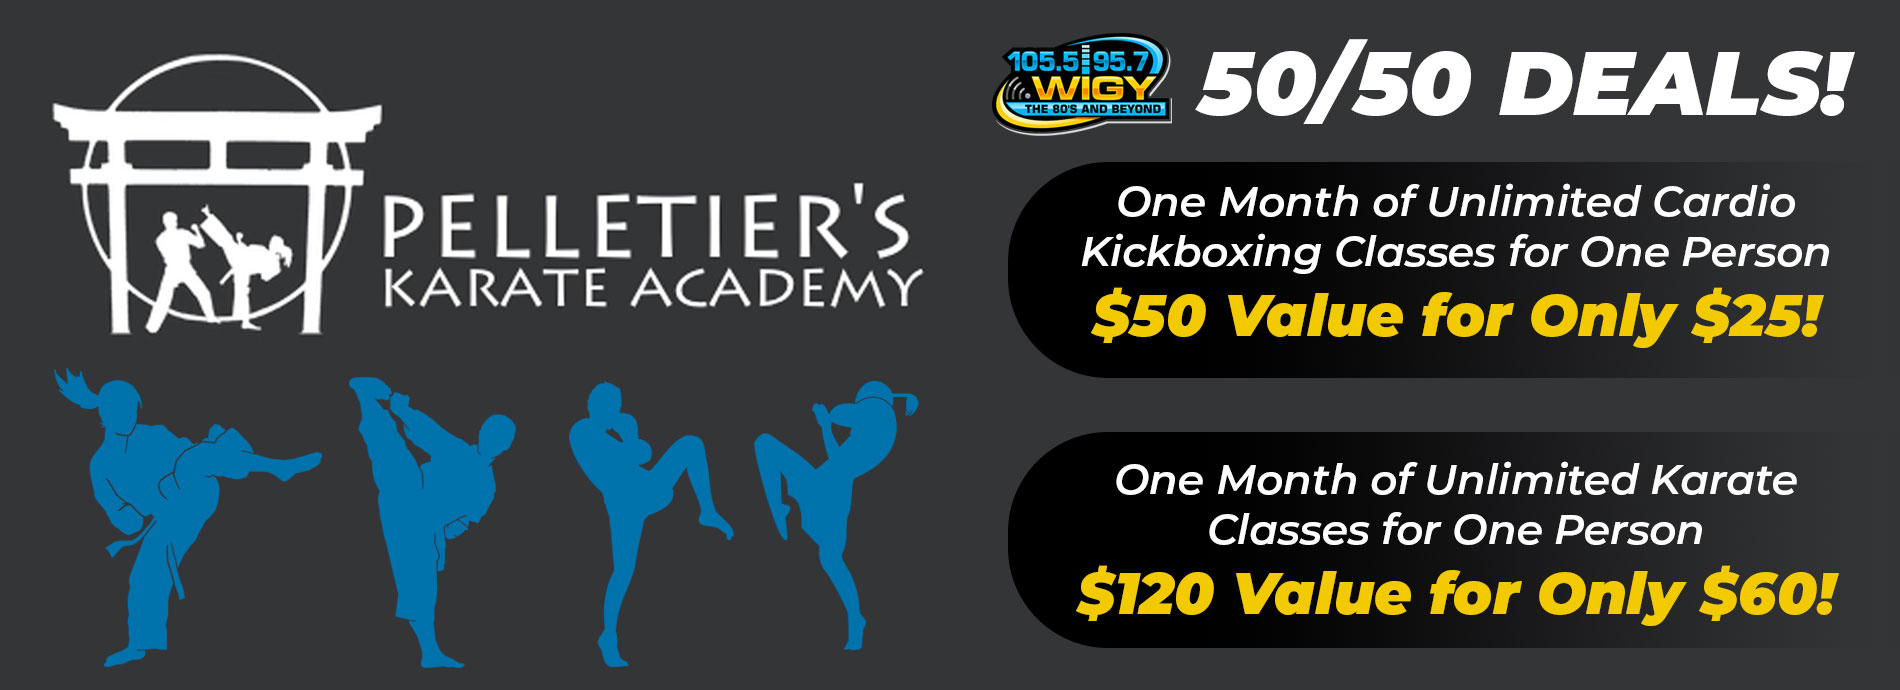 WIGY 50-50 - Pelletier's Karate